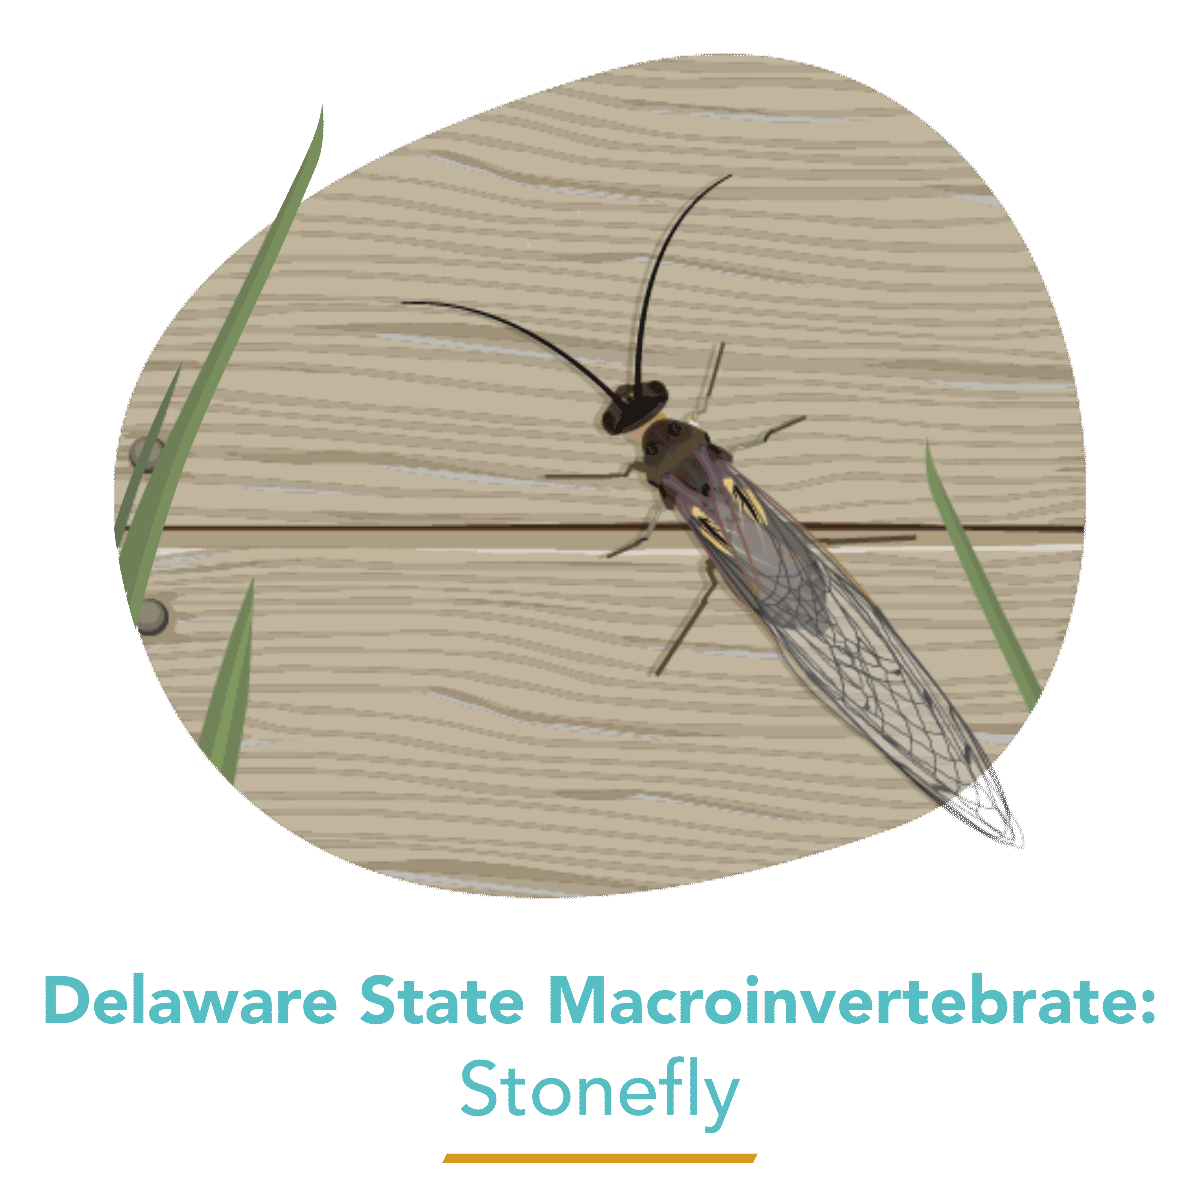  State Macroinvertebrate - Stonefly